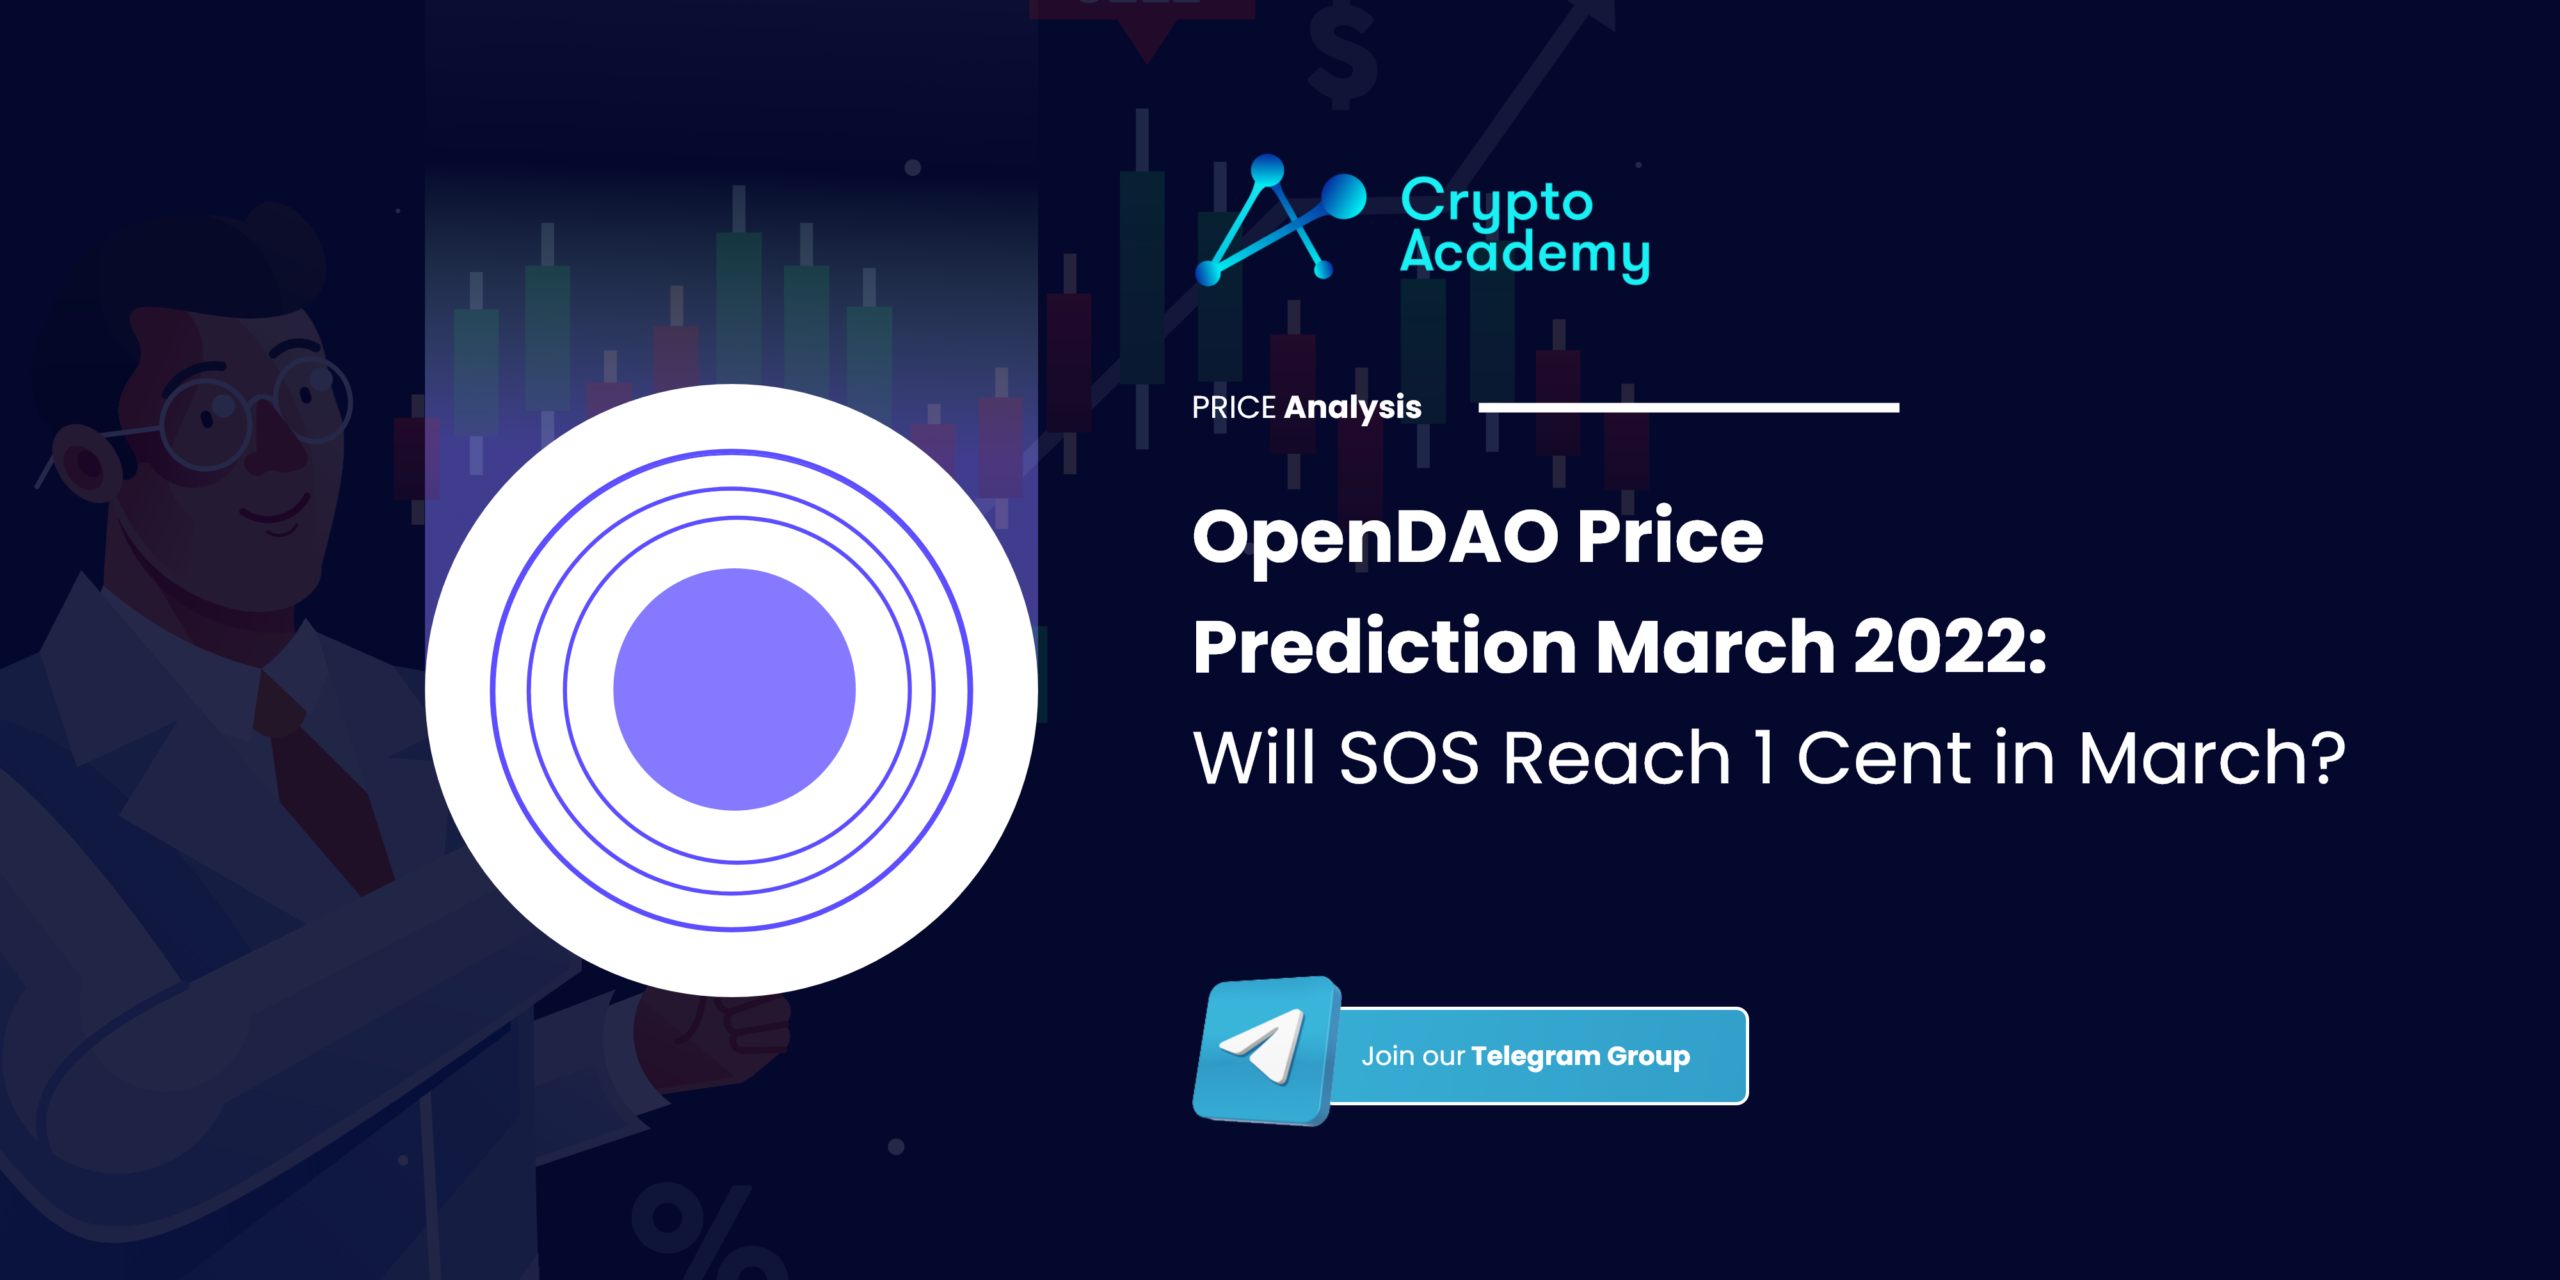 OpenDAO Price Prediction March 2022: Will SOS Reach 1 Cent in March?